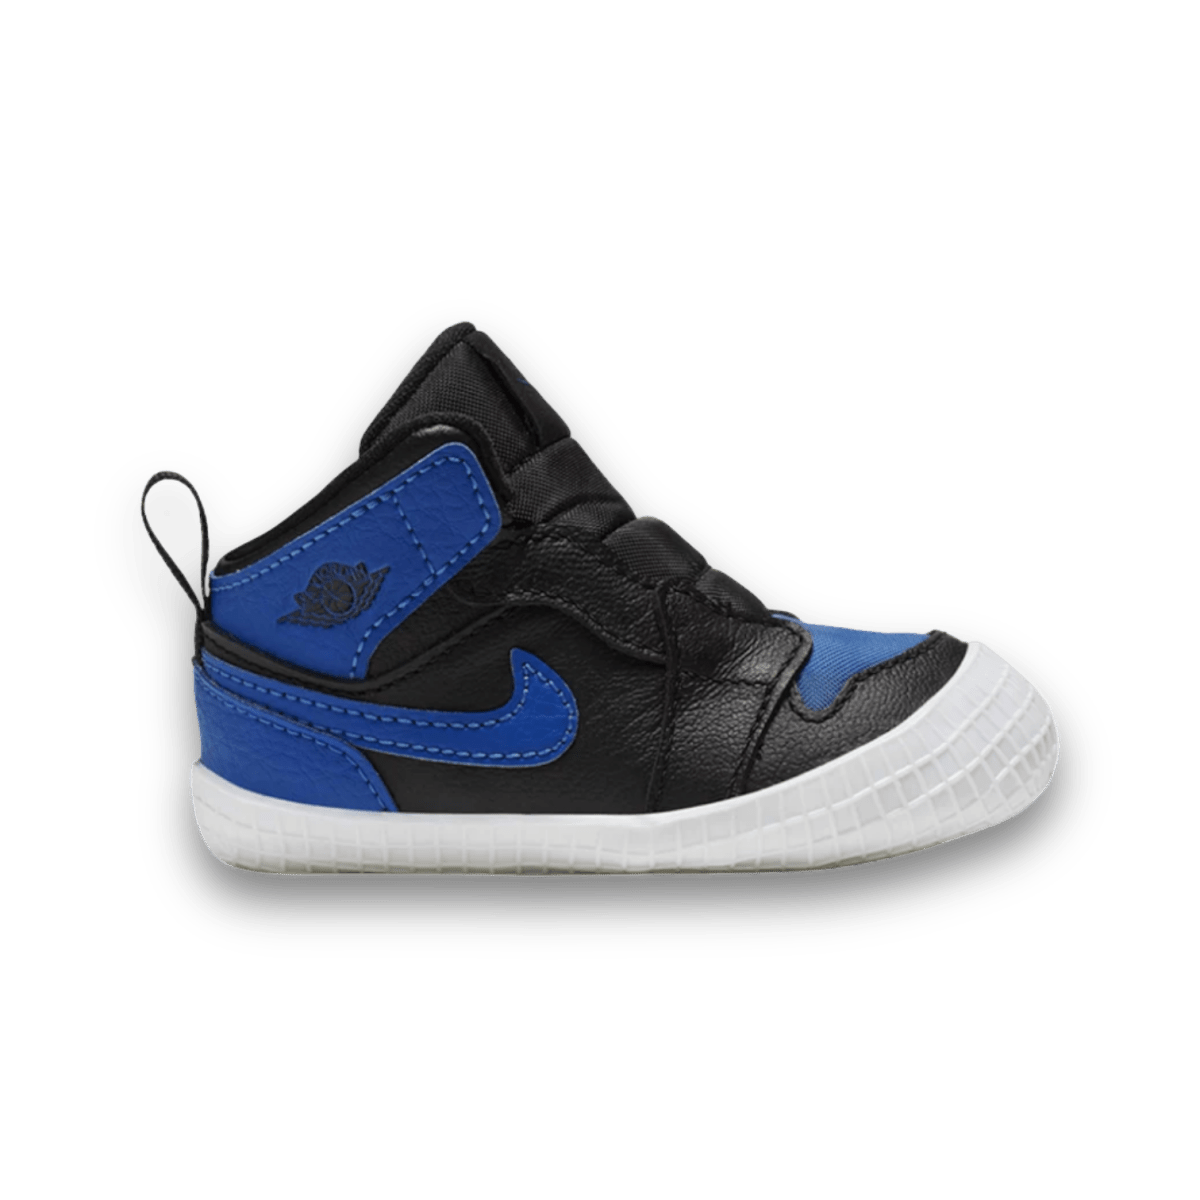 Jordan 1 High OG "Royal Reimagined" - Toddler - High Sneaker - Jawns on Fire Sneakers & Streetwear